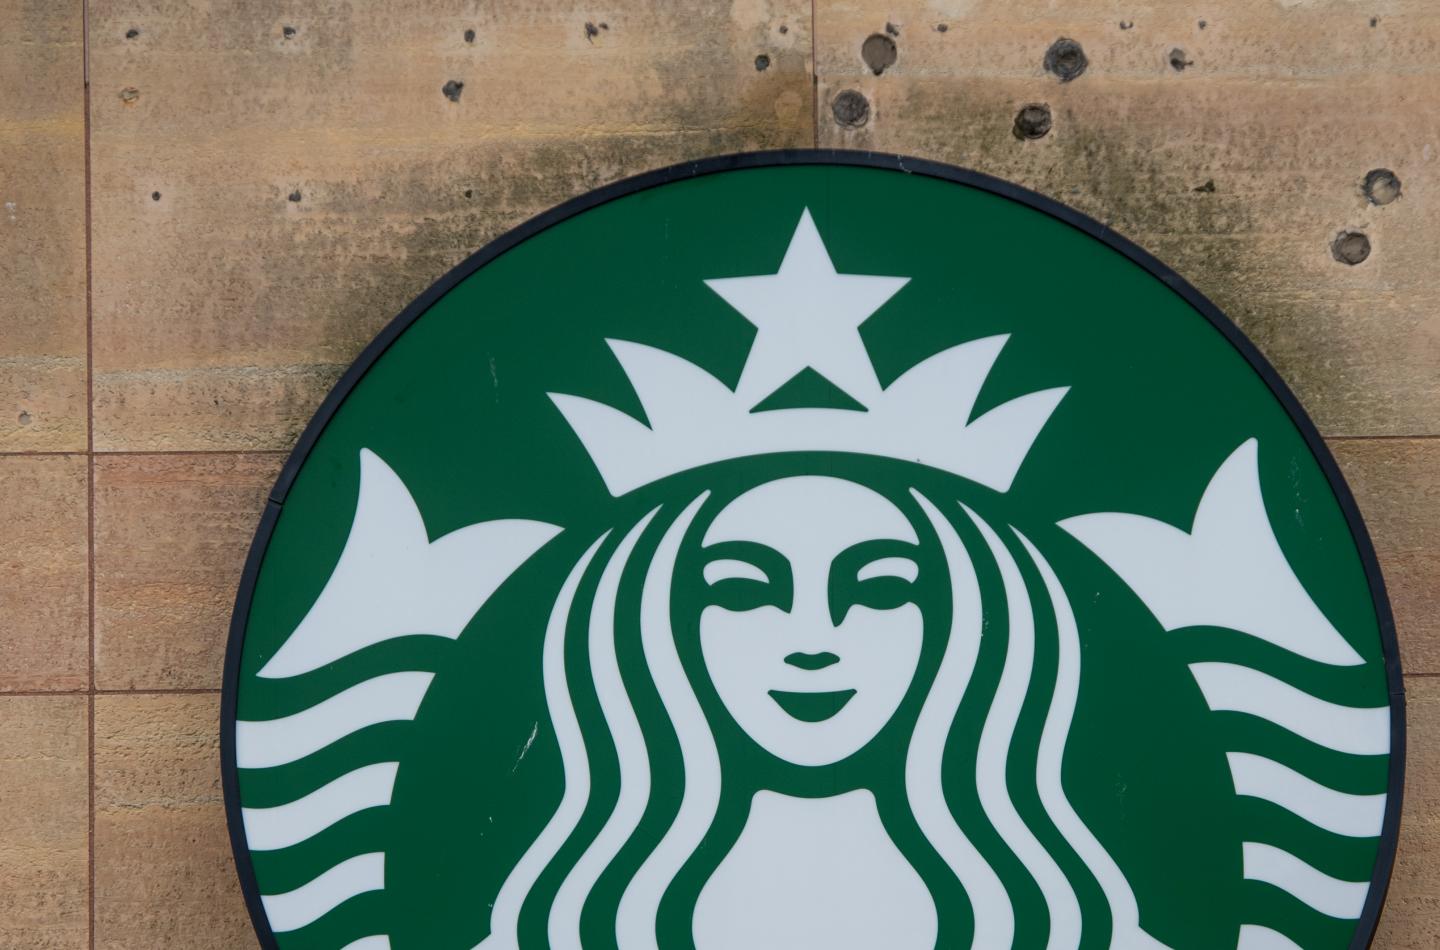 Fake Starbucks Logo - Fake Starbucks Offers of Free Coffee for Black Customers Are